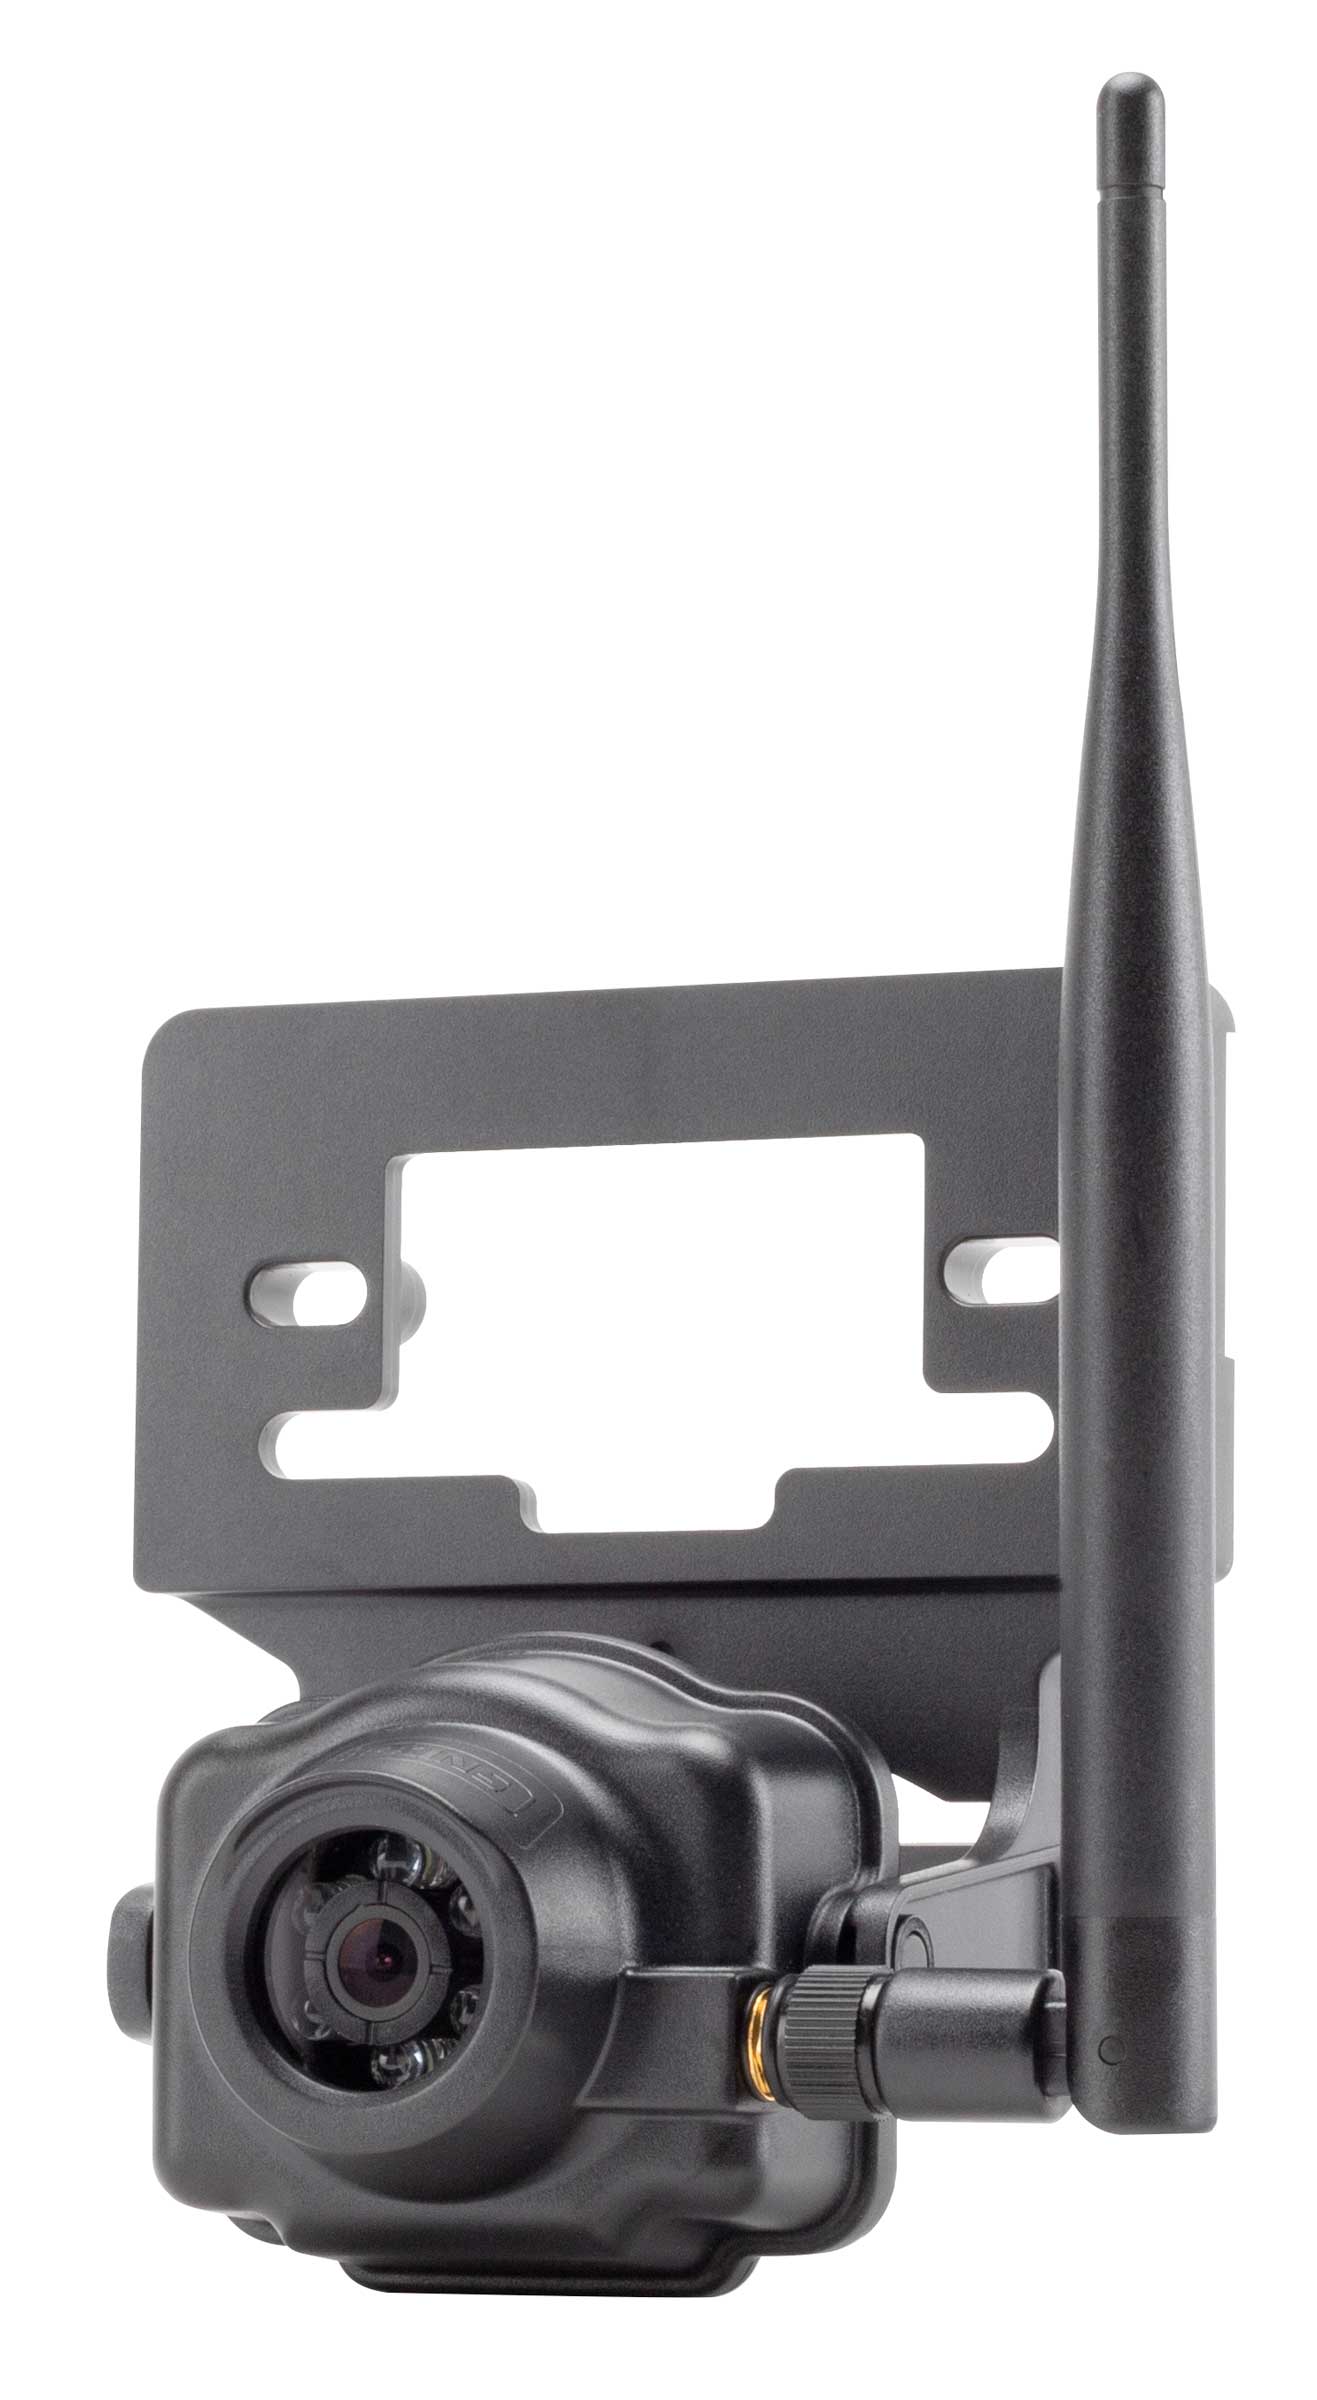 Hopkins 50050 vueSMART Trailer Camera